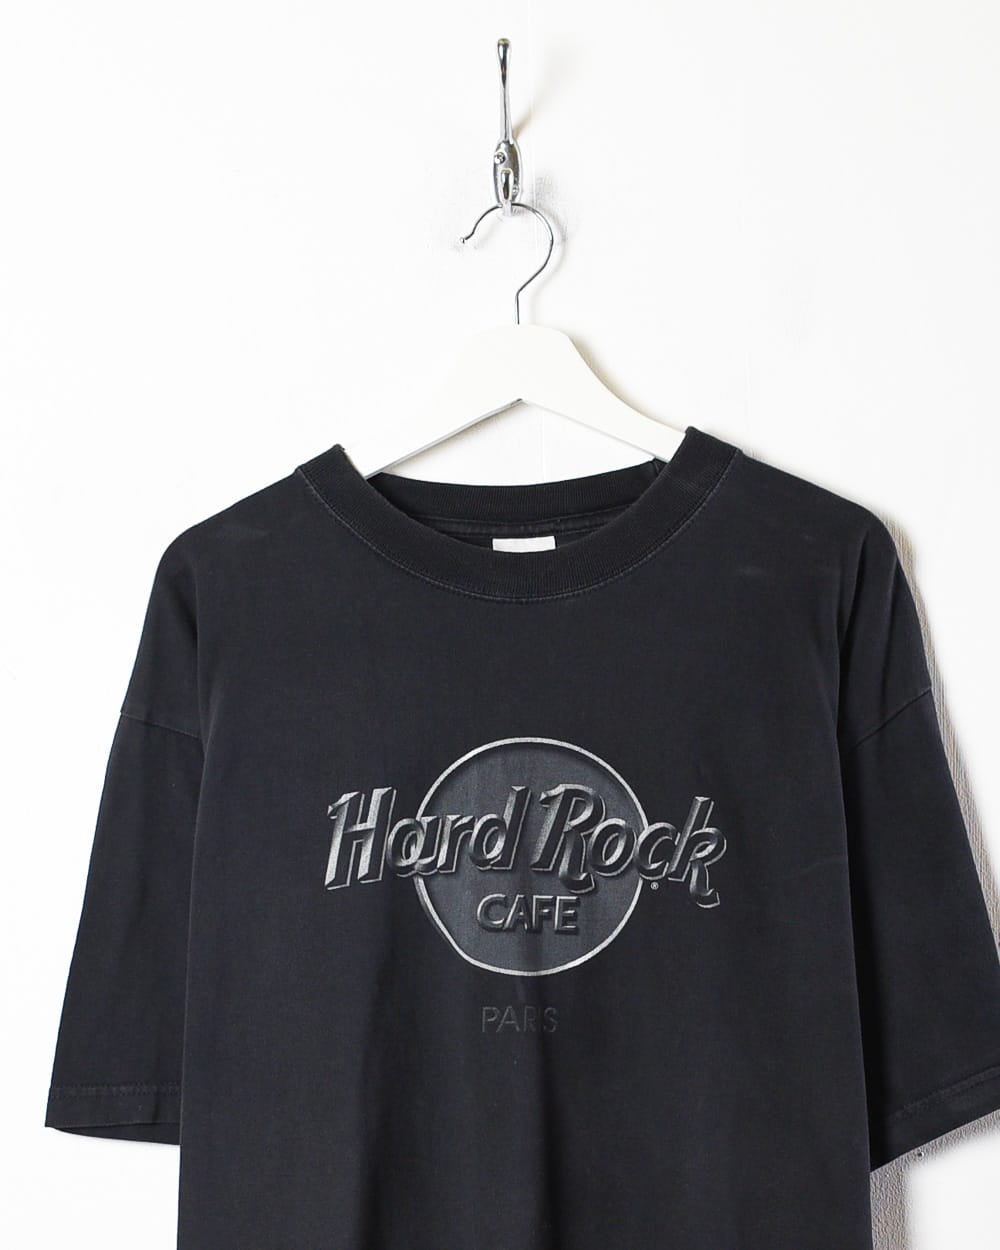 Black Hard Rock Cafe Paris T-Shirt - X-Large